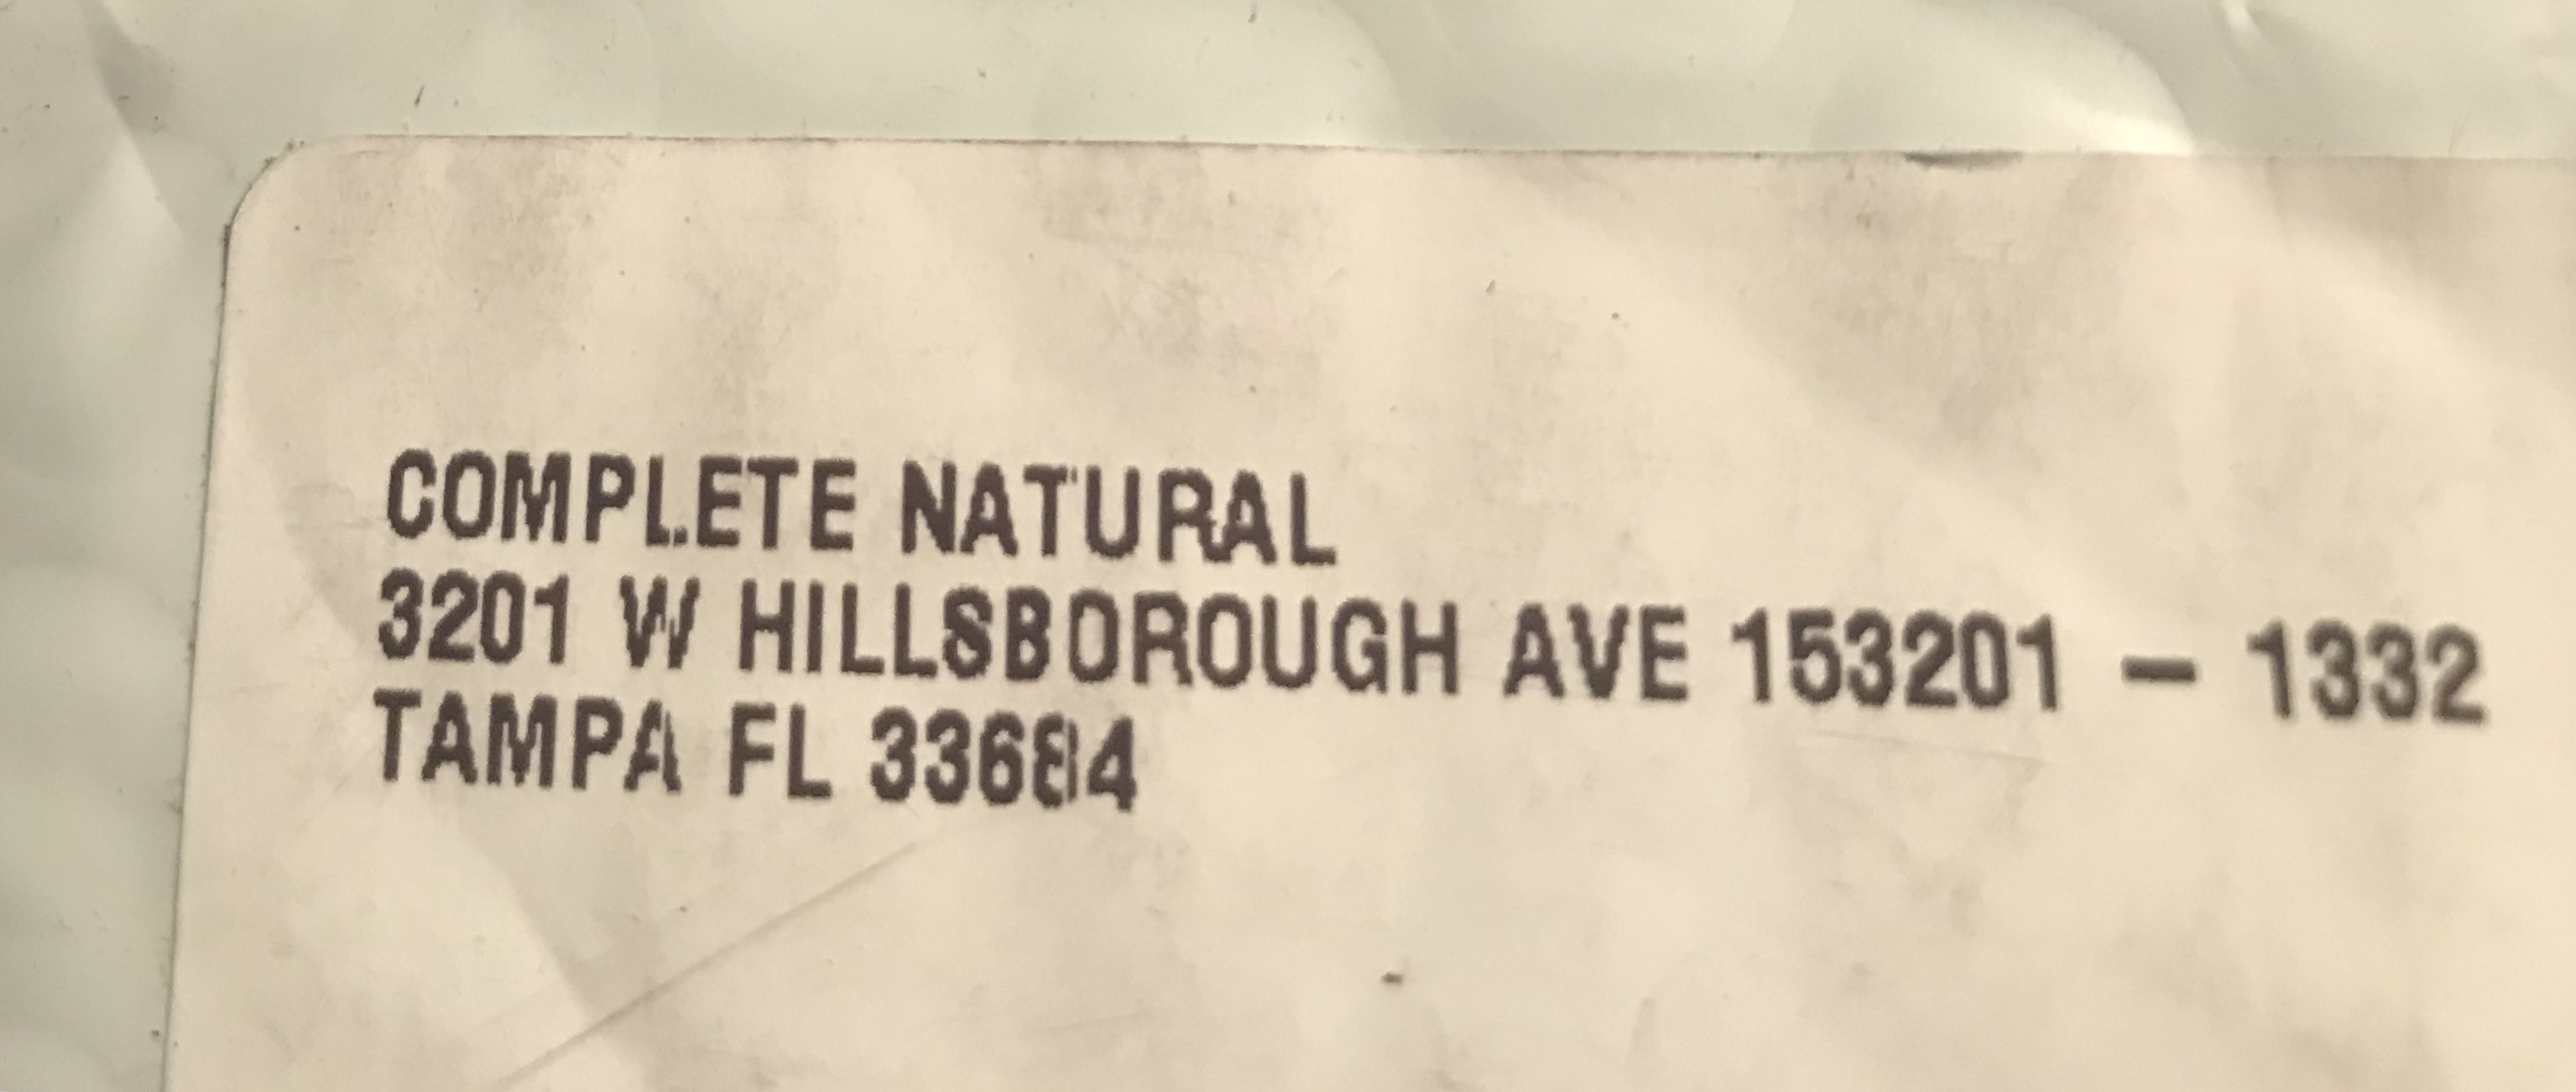 Return address on package. 